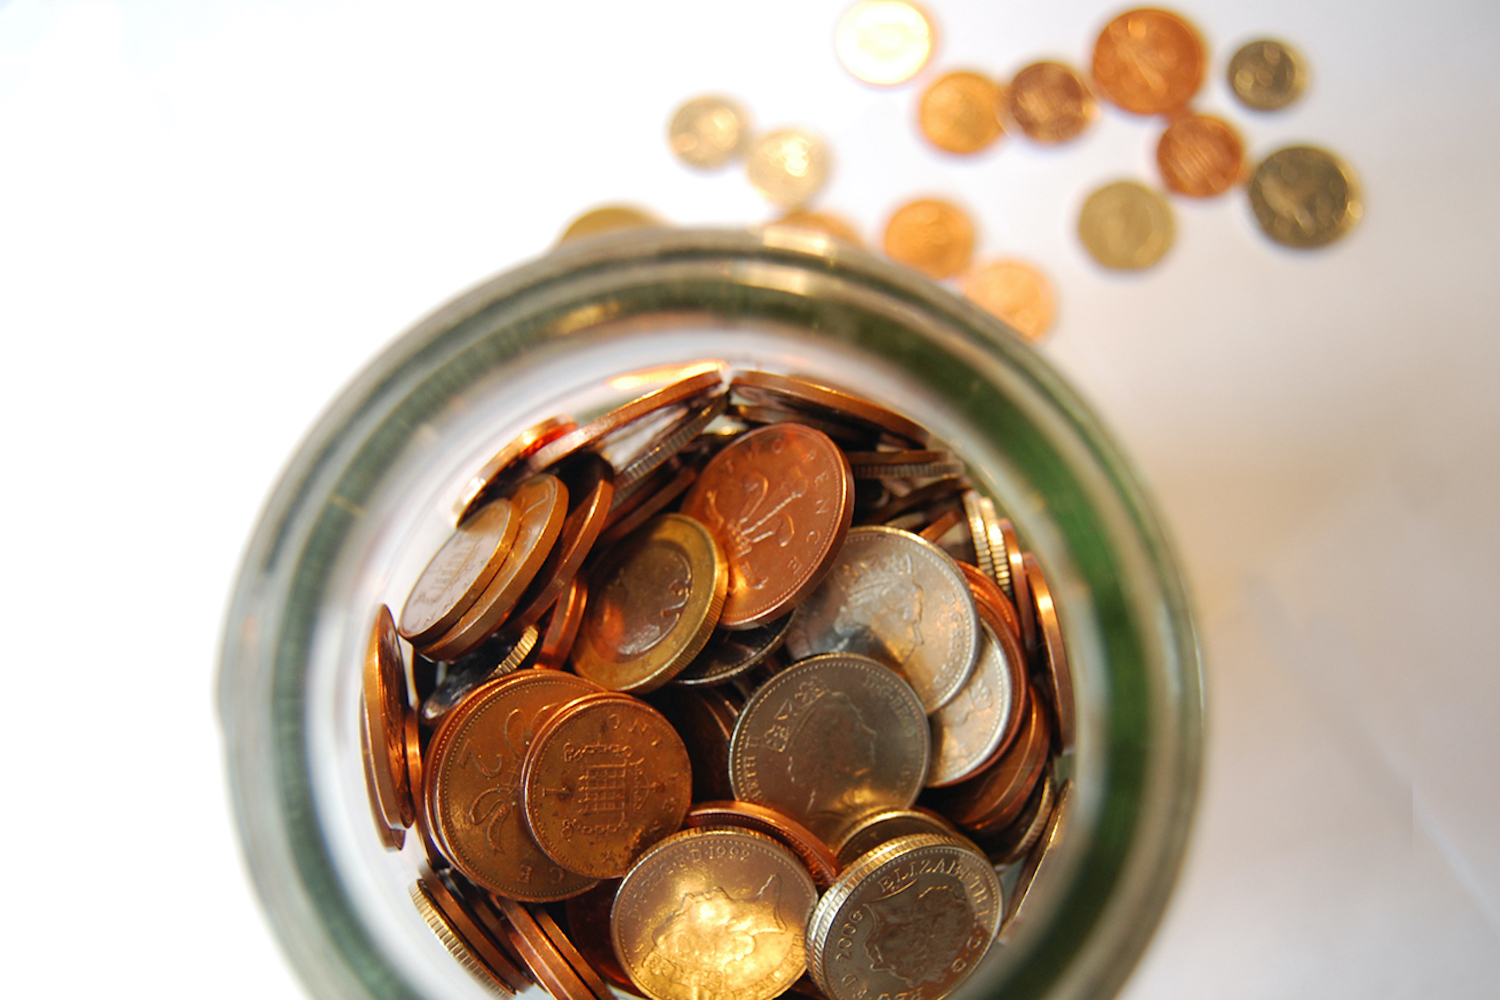 A jar of coins